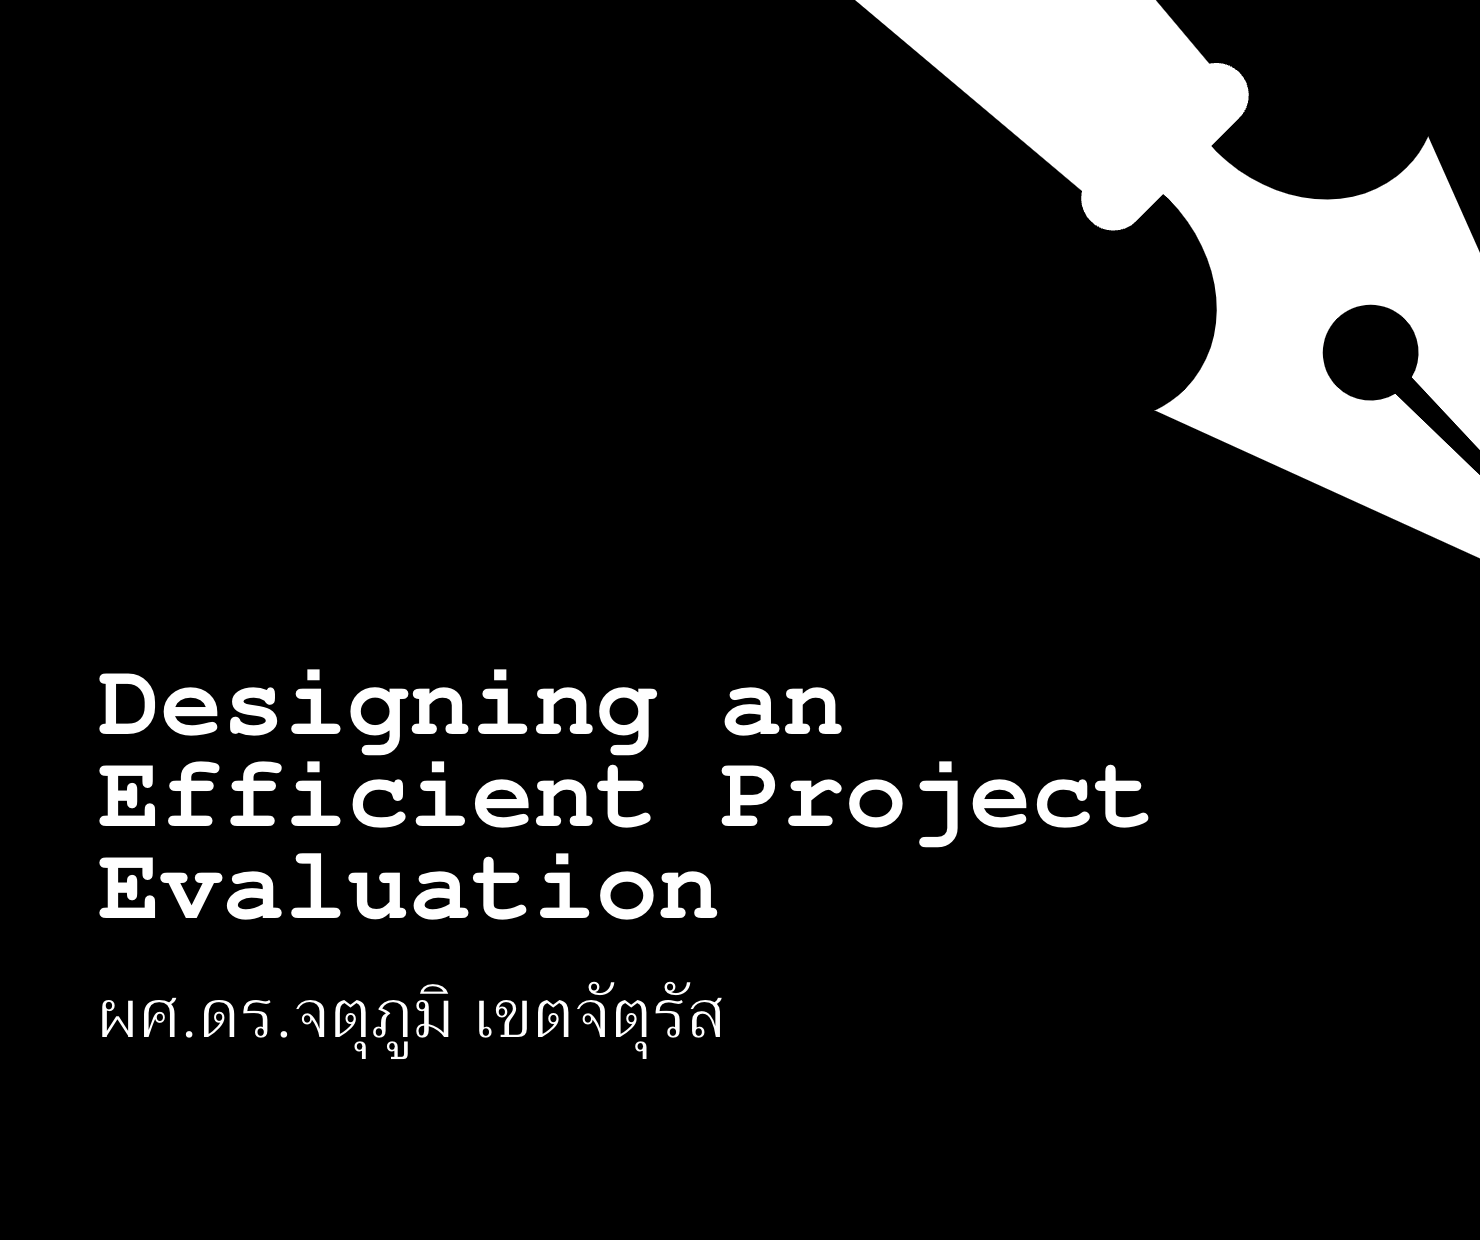 Workshop 5 - Designing an Efficient Project Evaluation